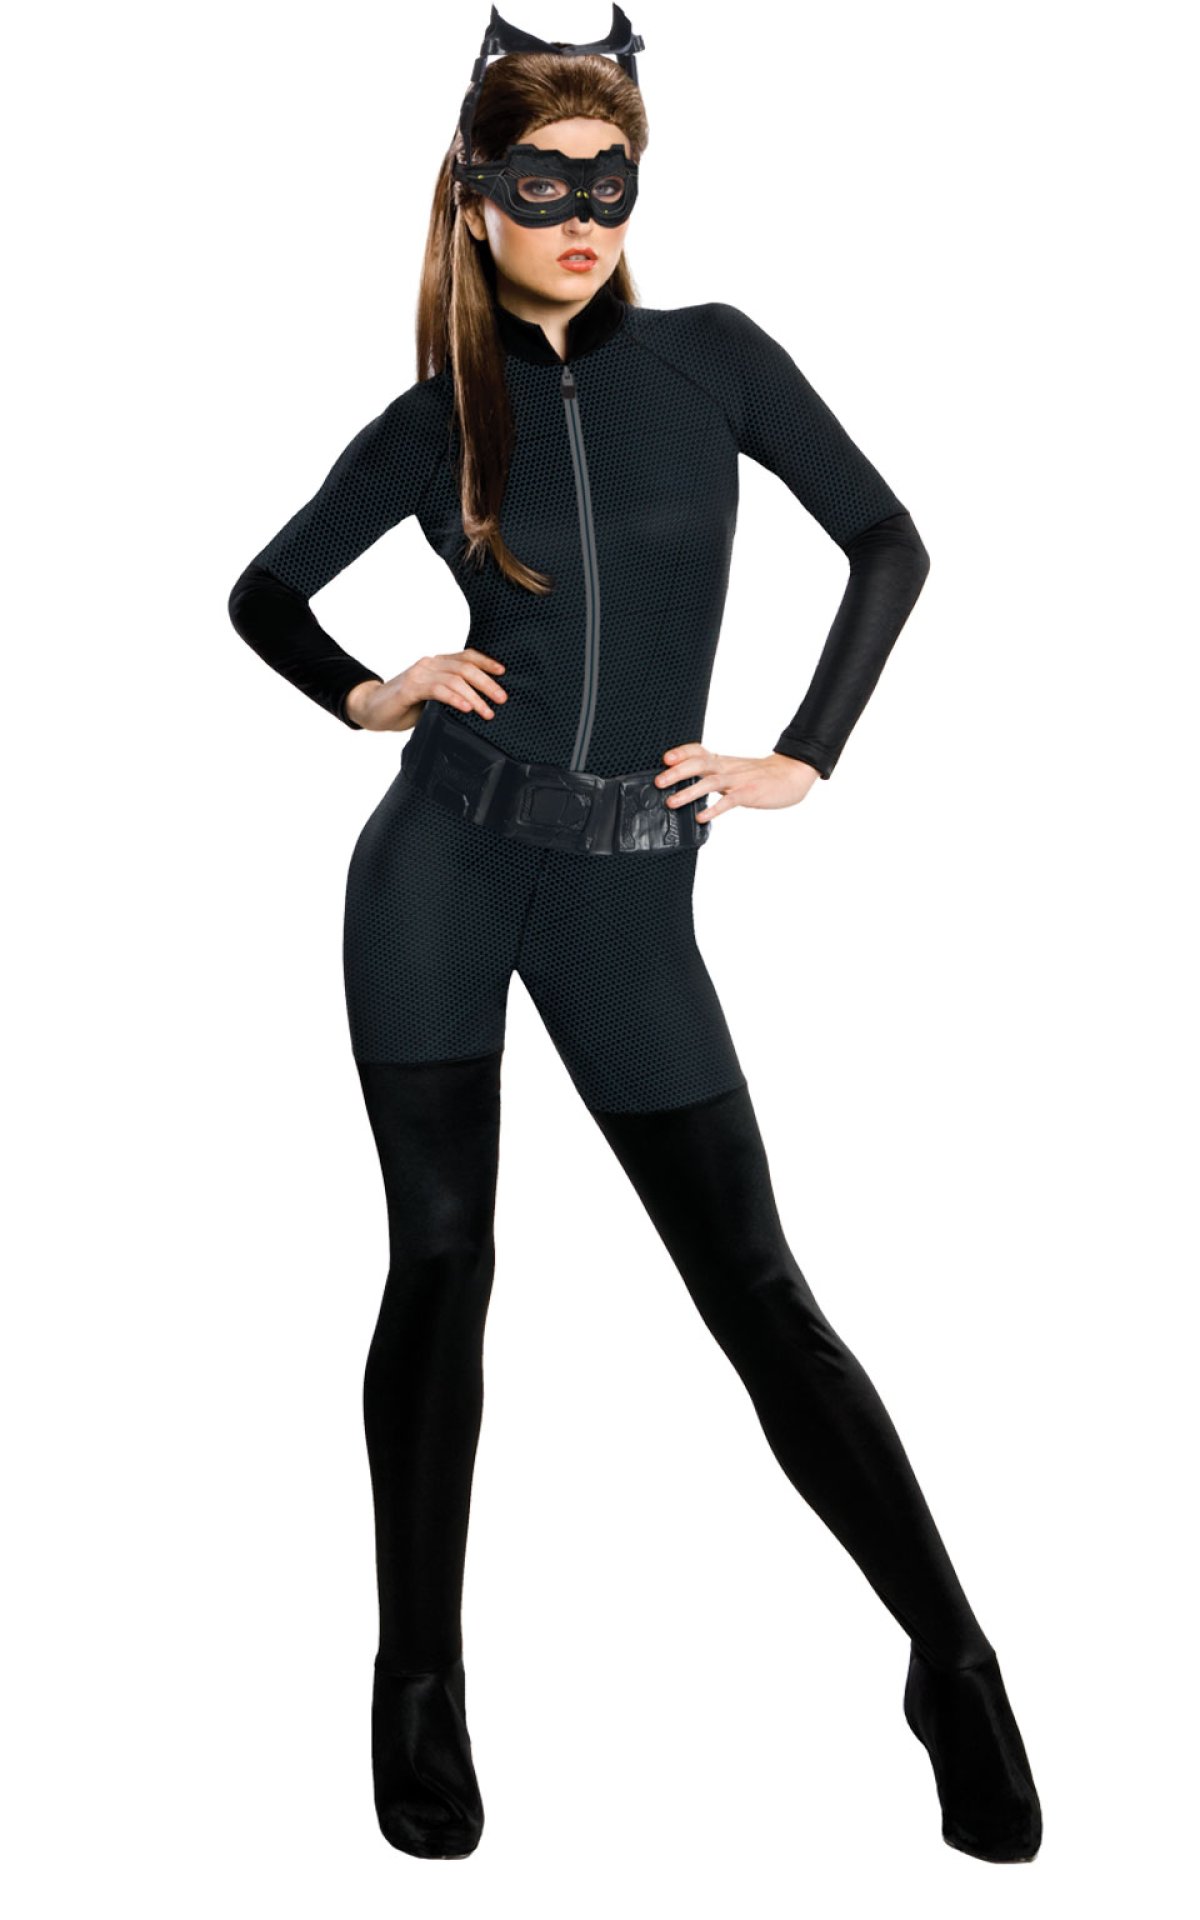 Køb The Dark Knight® Catwoman Kostume til 399 kr